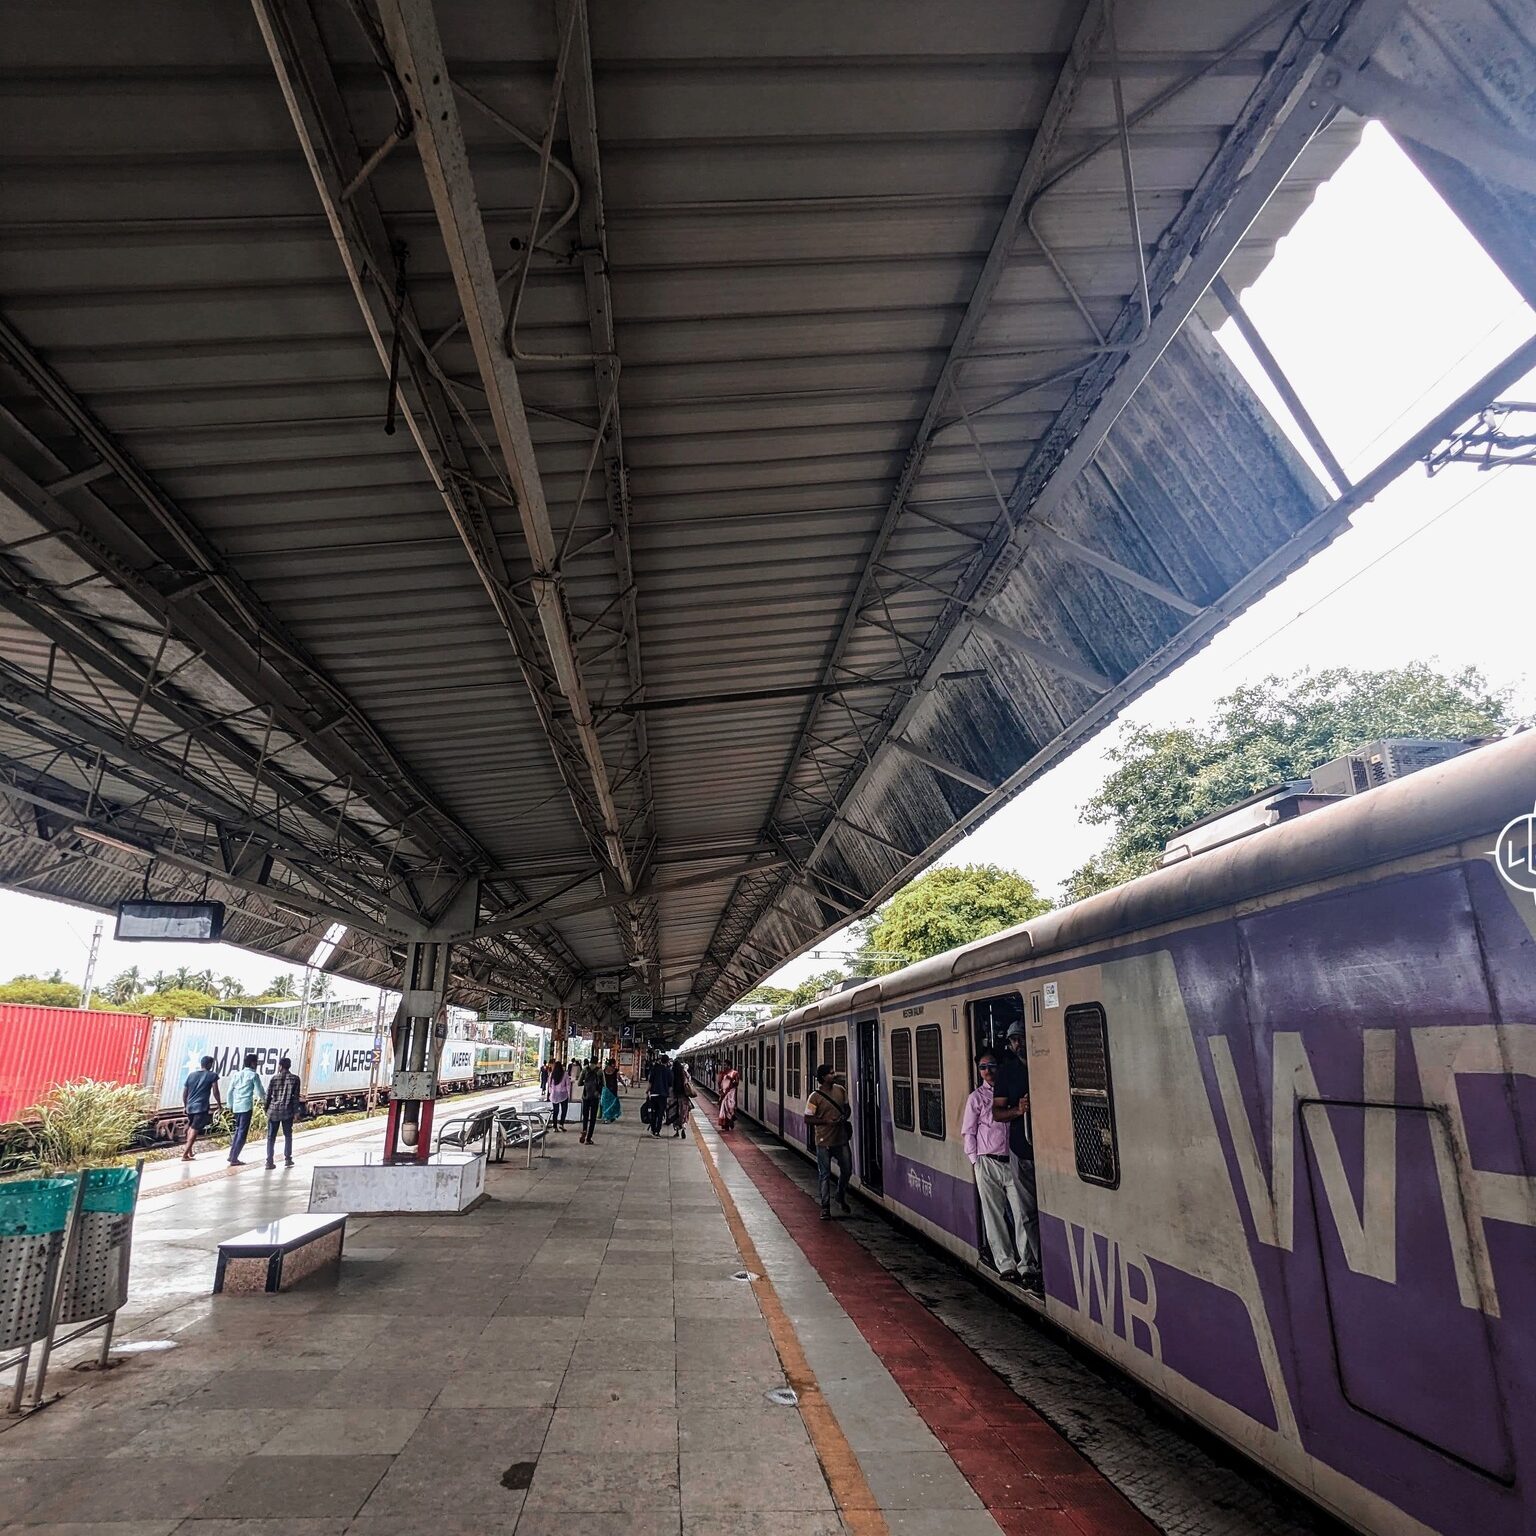 western line mumbai train, India